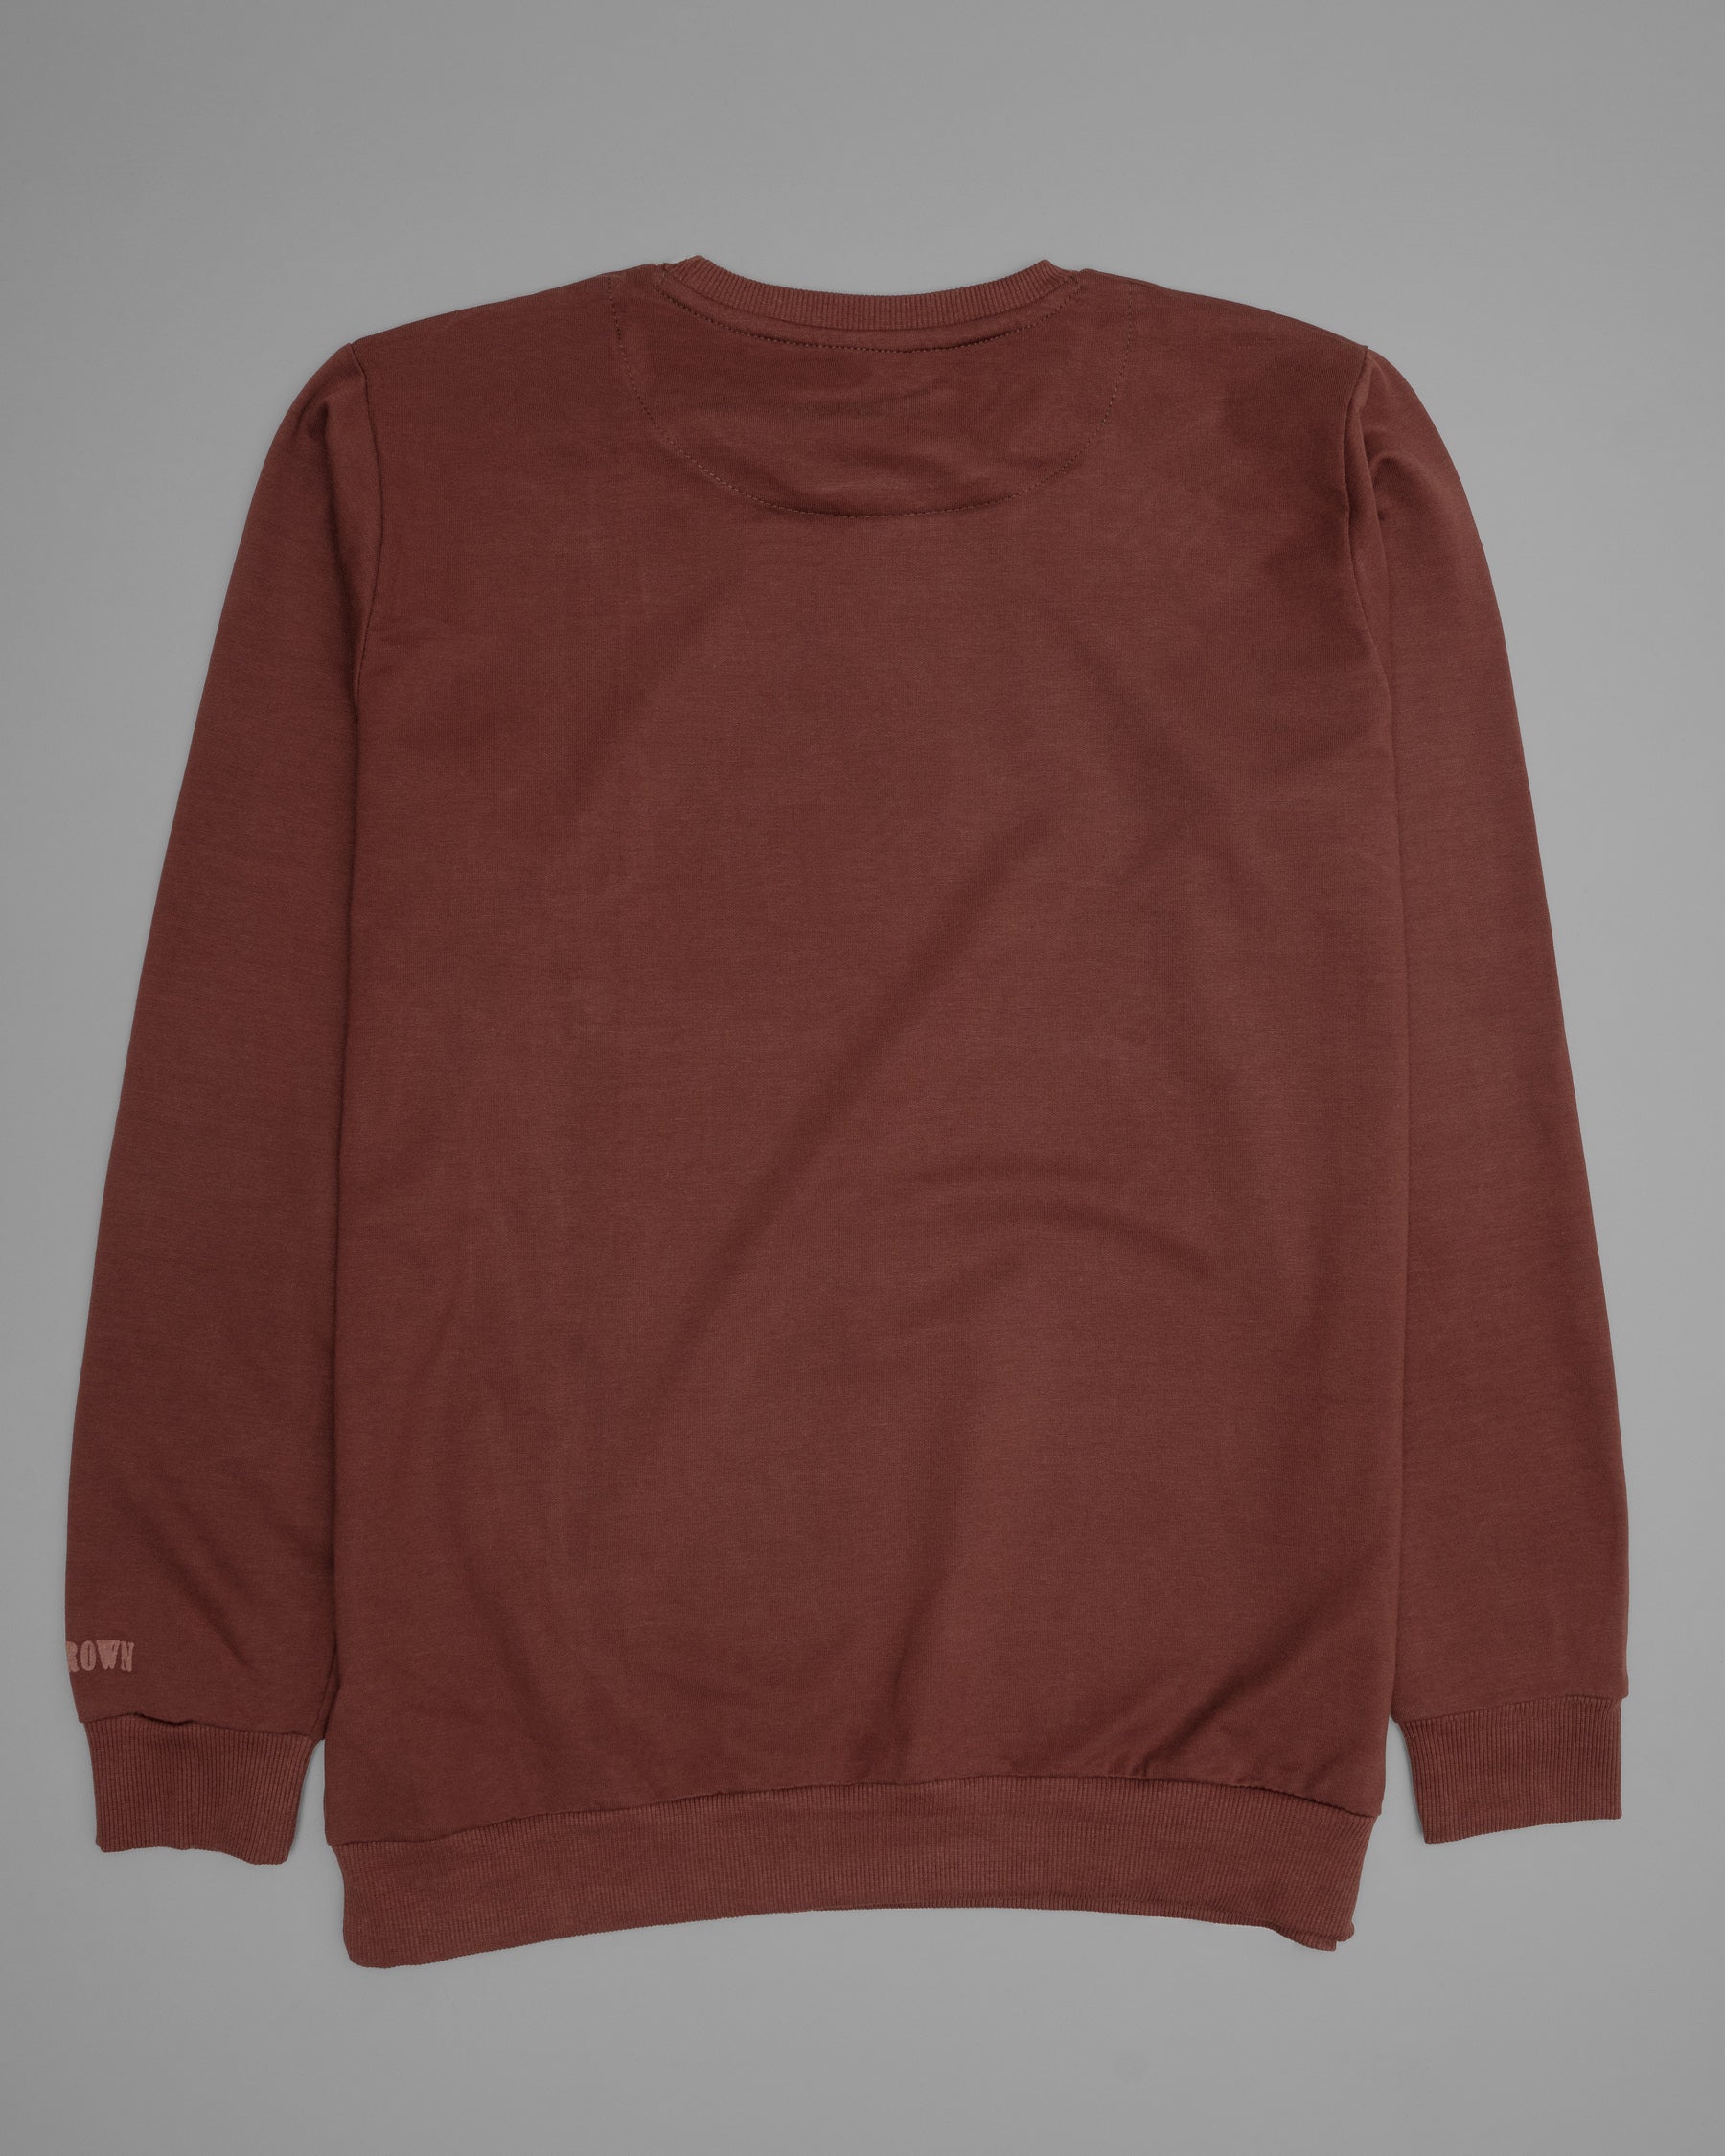 Syrup Brown Super Soft Premium Cotton Full Sleeve Sweatshirt